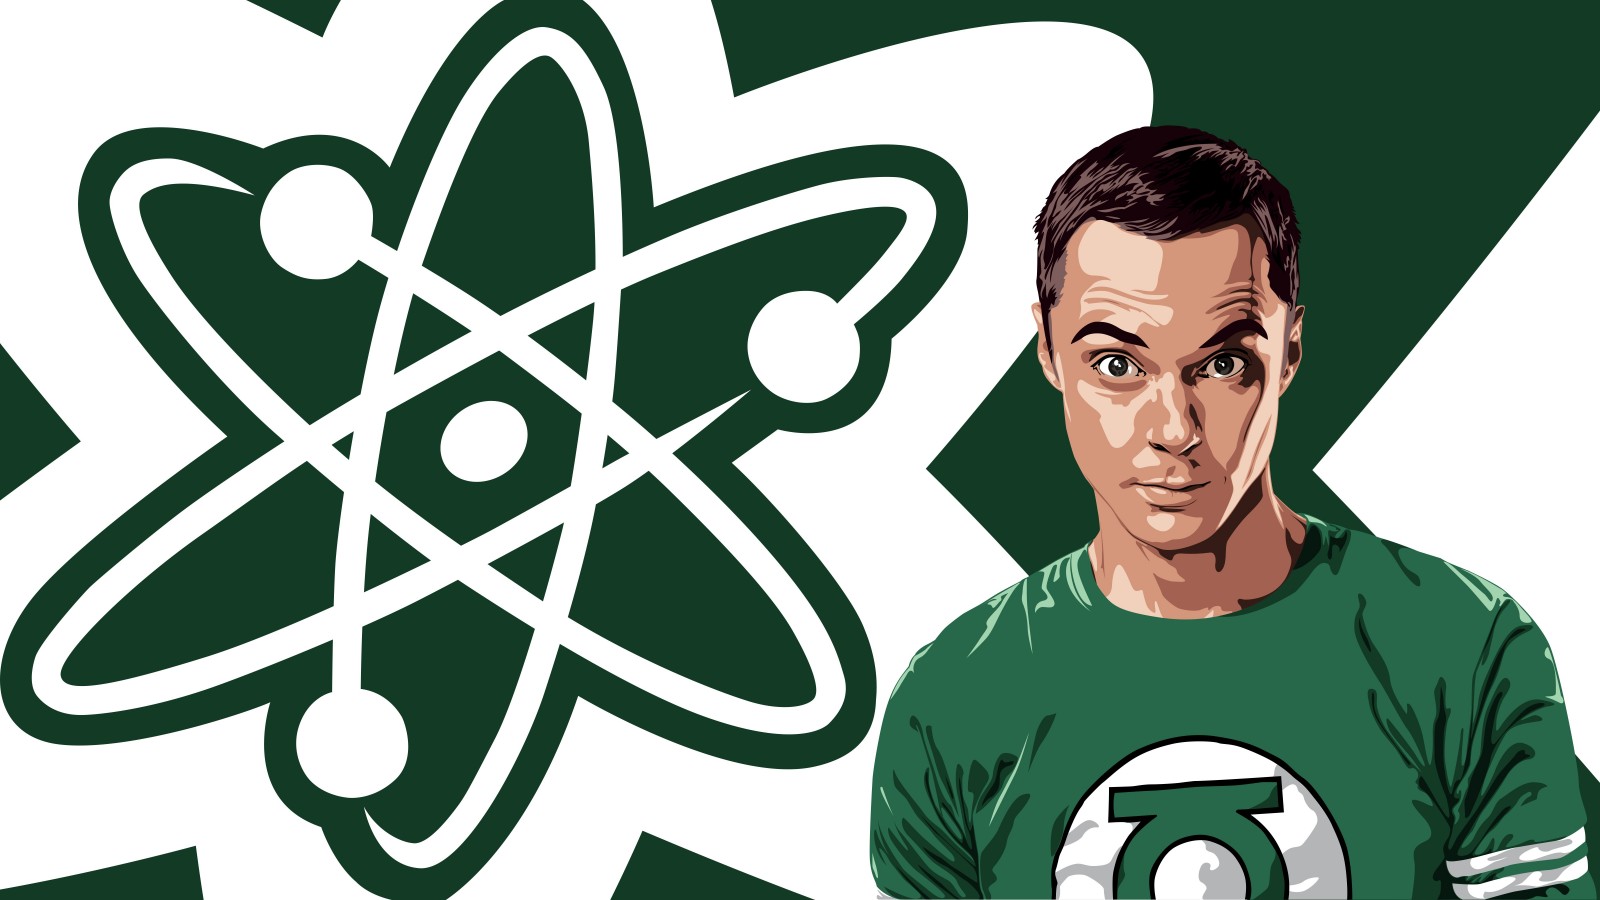 illustration, cartoon, brand, The Big Bang Theory, Sheldon Cooper, font High quality walls